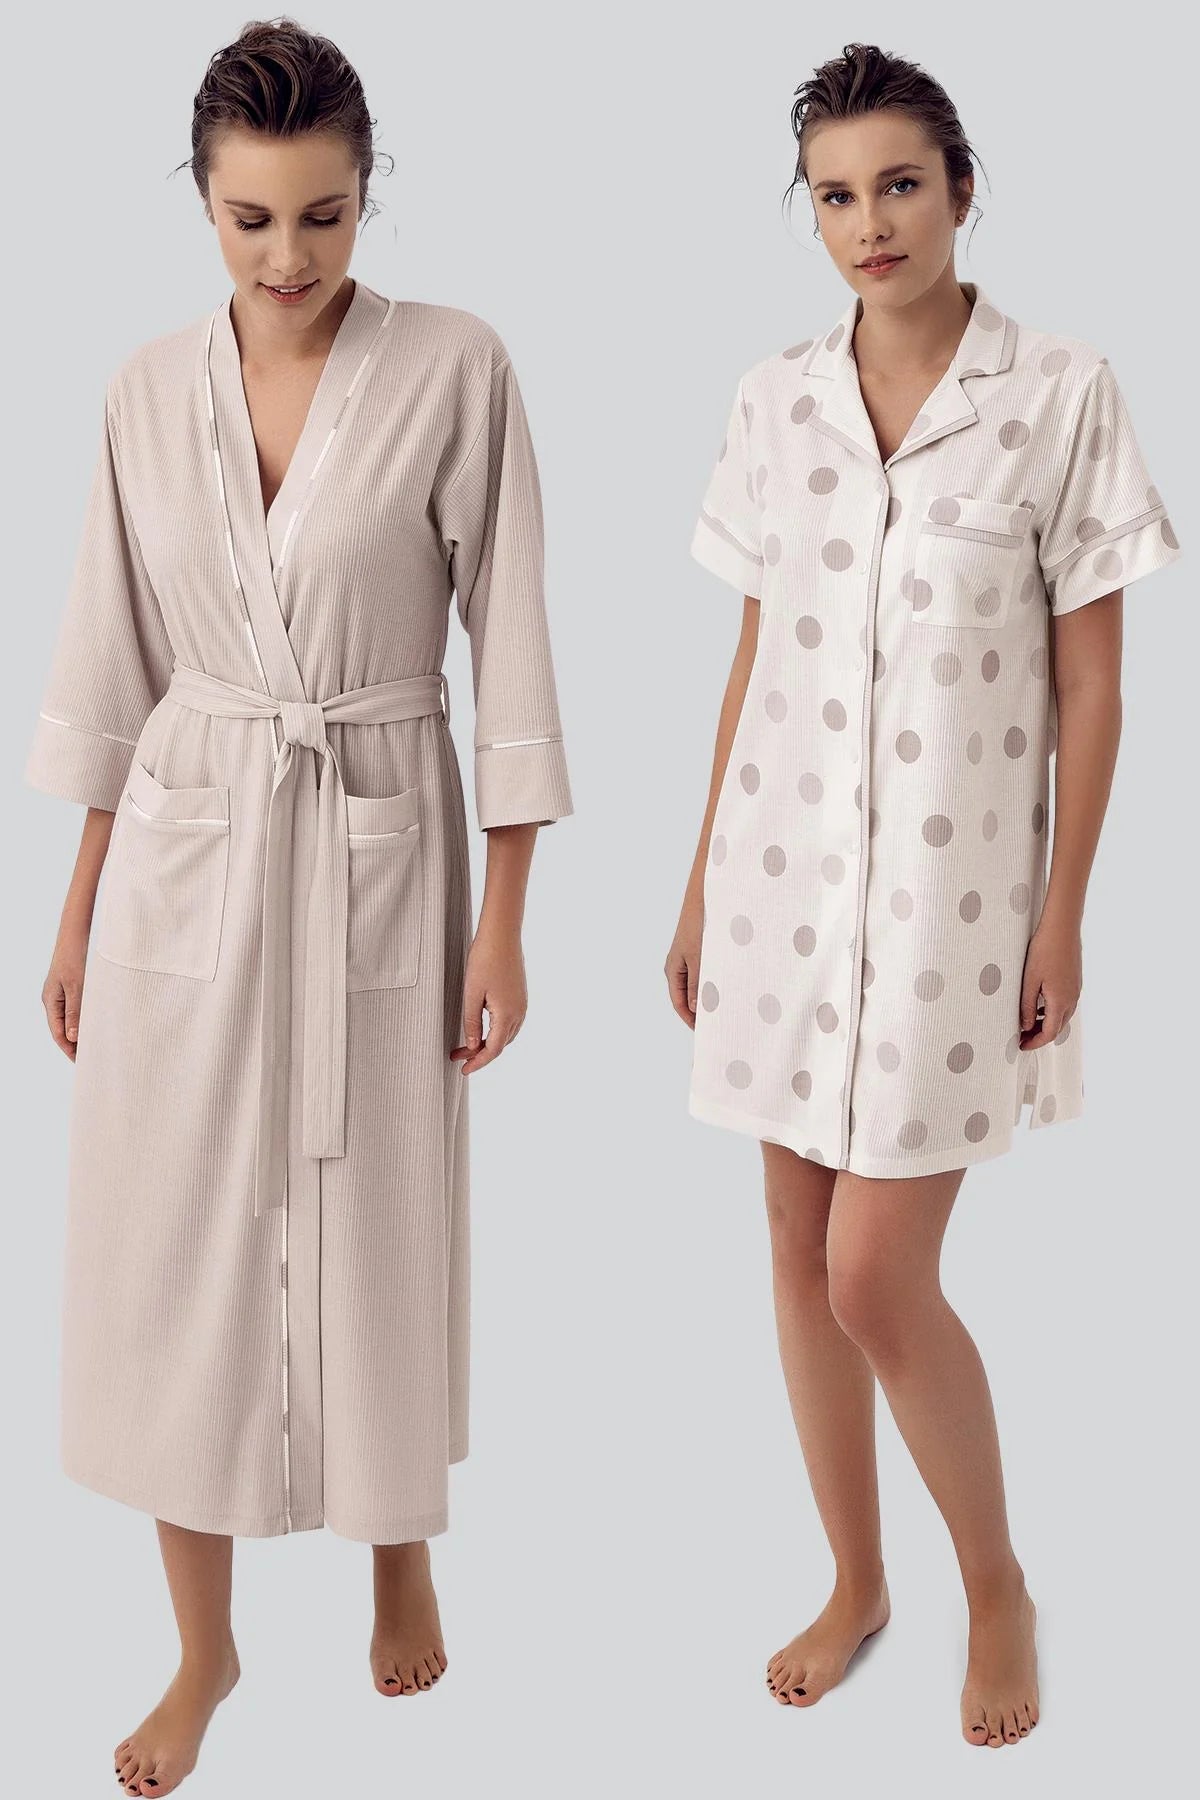 Shopymommy 16410 Polka Dot Maternity & Nursing Nightgown With Robe Beige